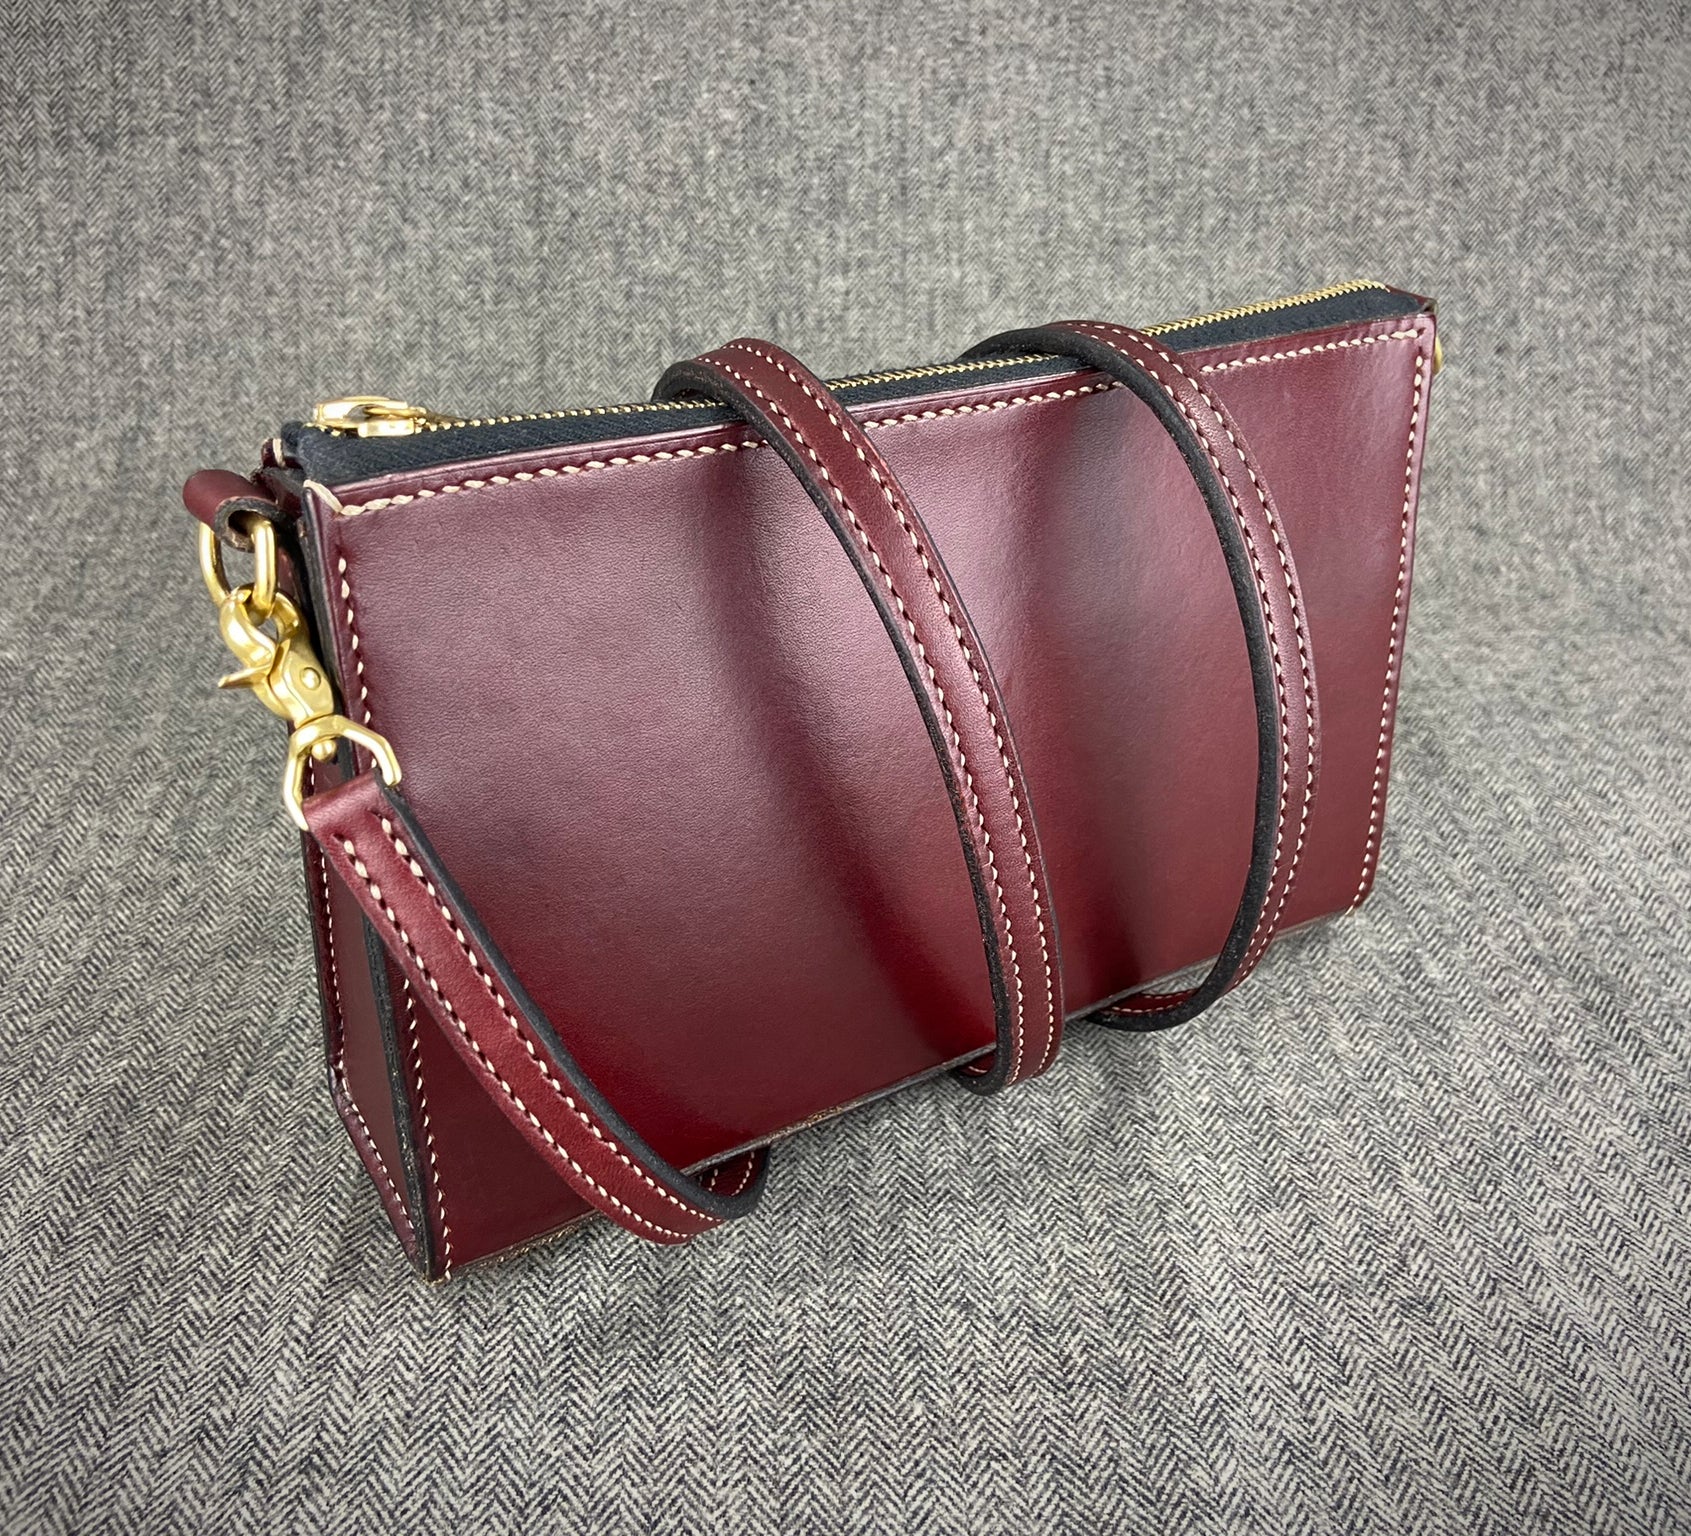 Amazon.com: SUPVOX 6pcs 24 Leather Purses Straps Leather Bag Handles  Replacement Purse Straps Handbag Bag Wallet Straps (Red Black and Yellow  Brown- Each Color 2pcs) : Clothing, Shoes & Jewelry